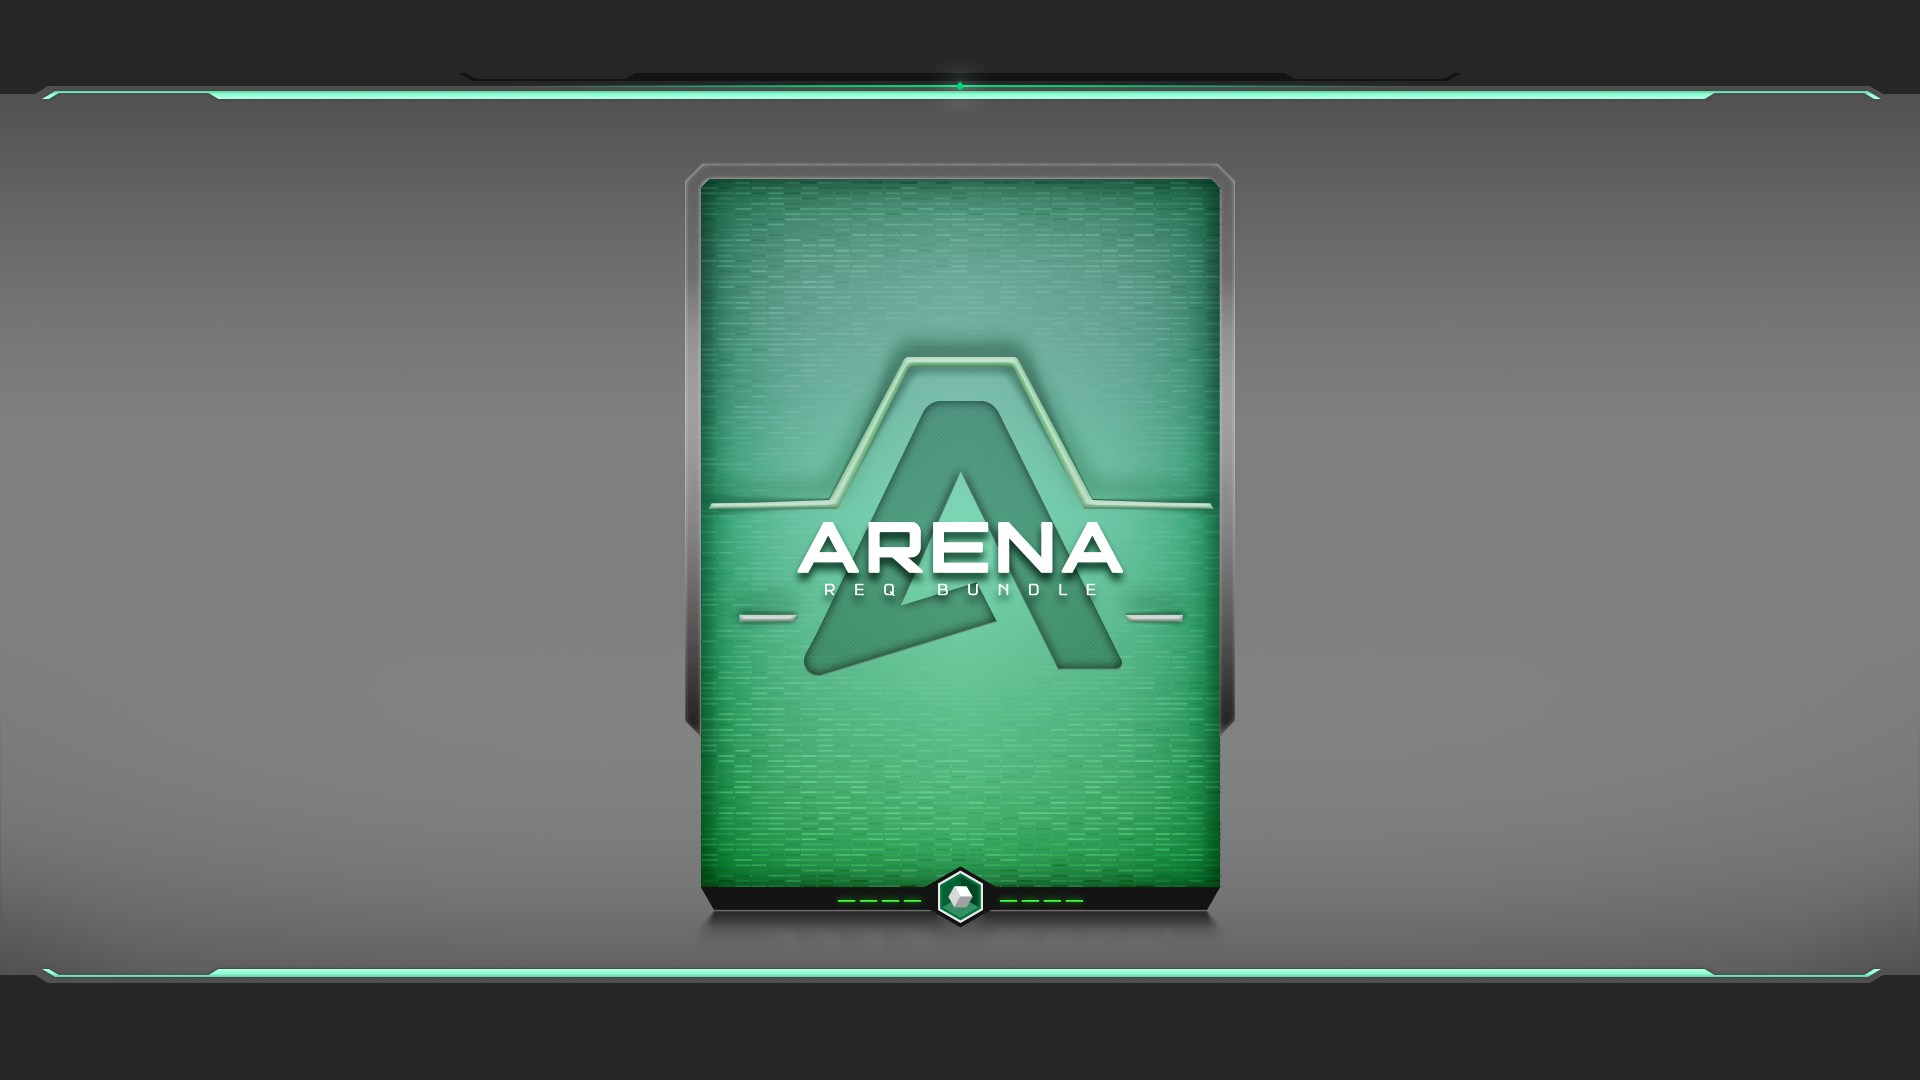 Halo 5 Guardians - Arena REQ Bundle DLC EU XBOX One CD Key 26.55 $